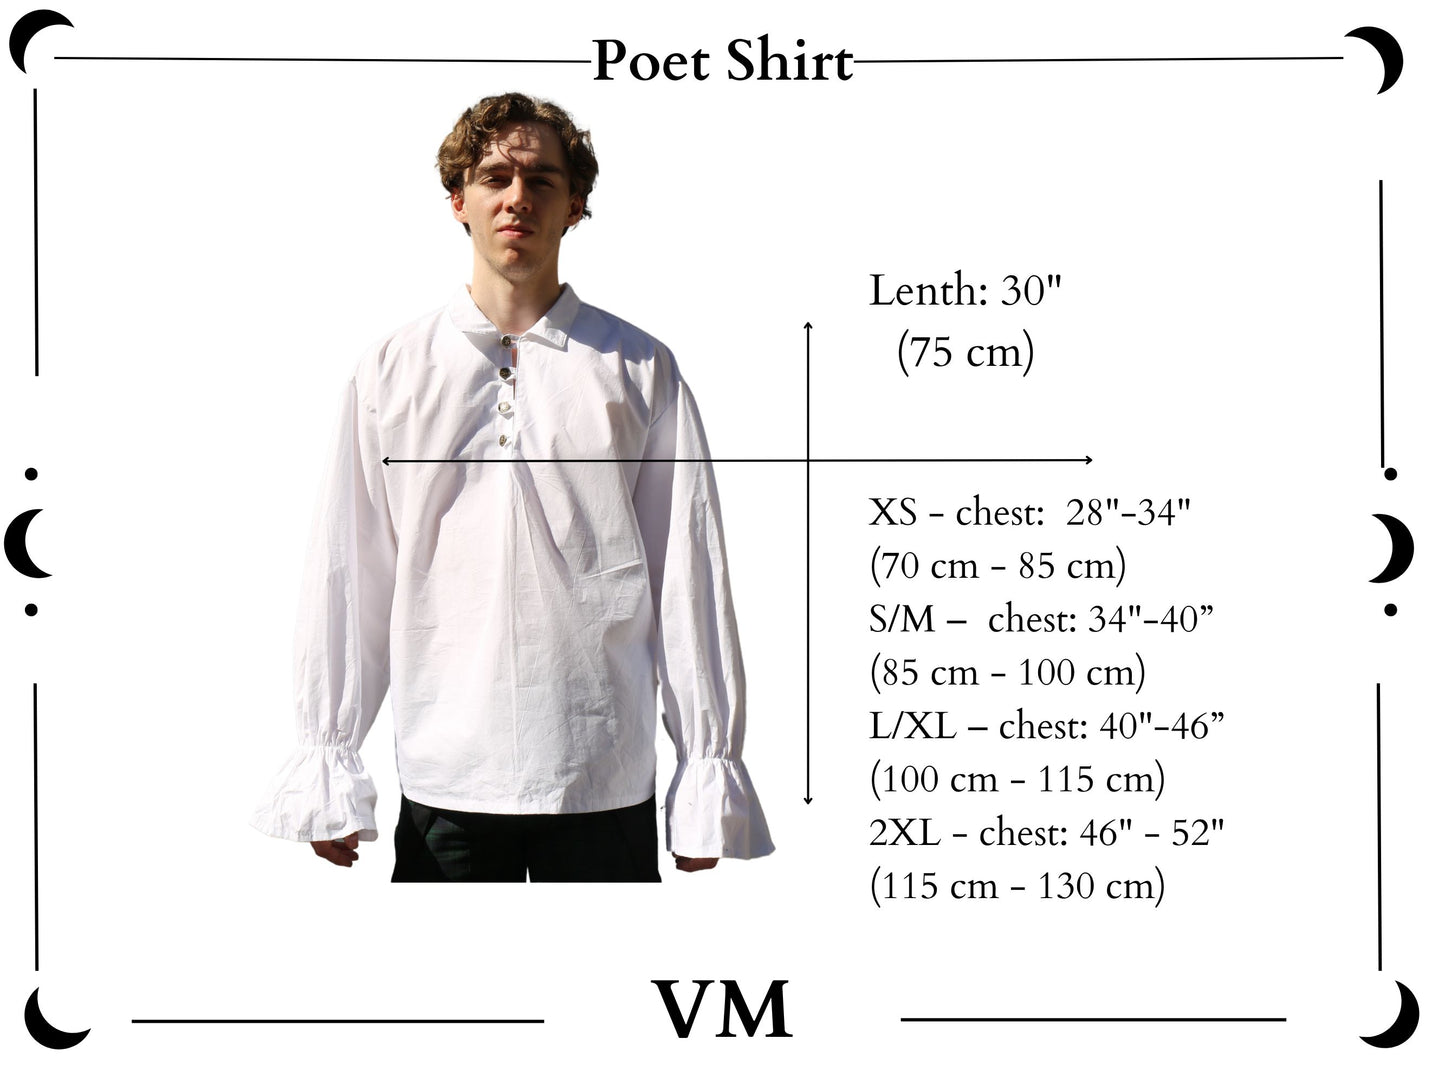 The VM Open Poet Shirt